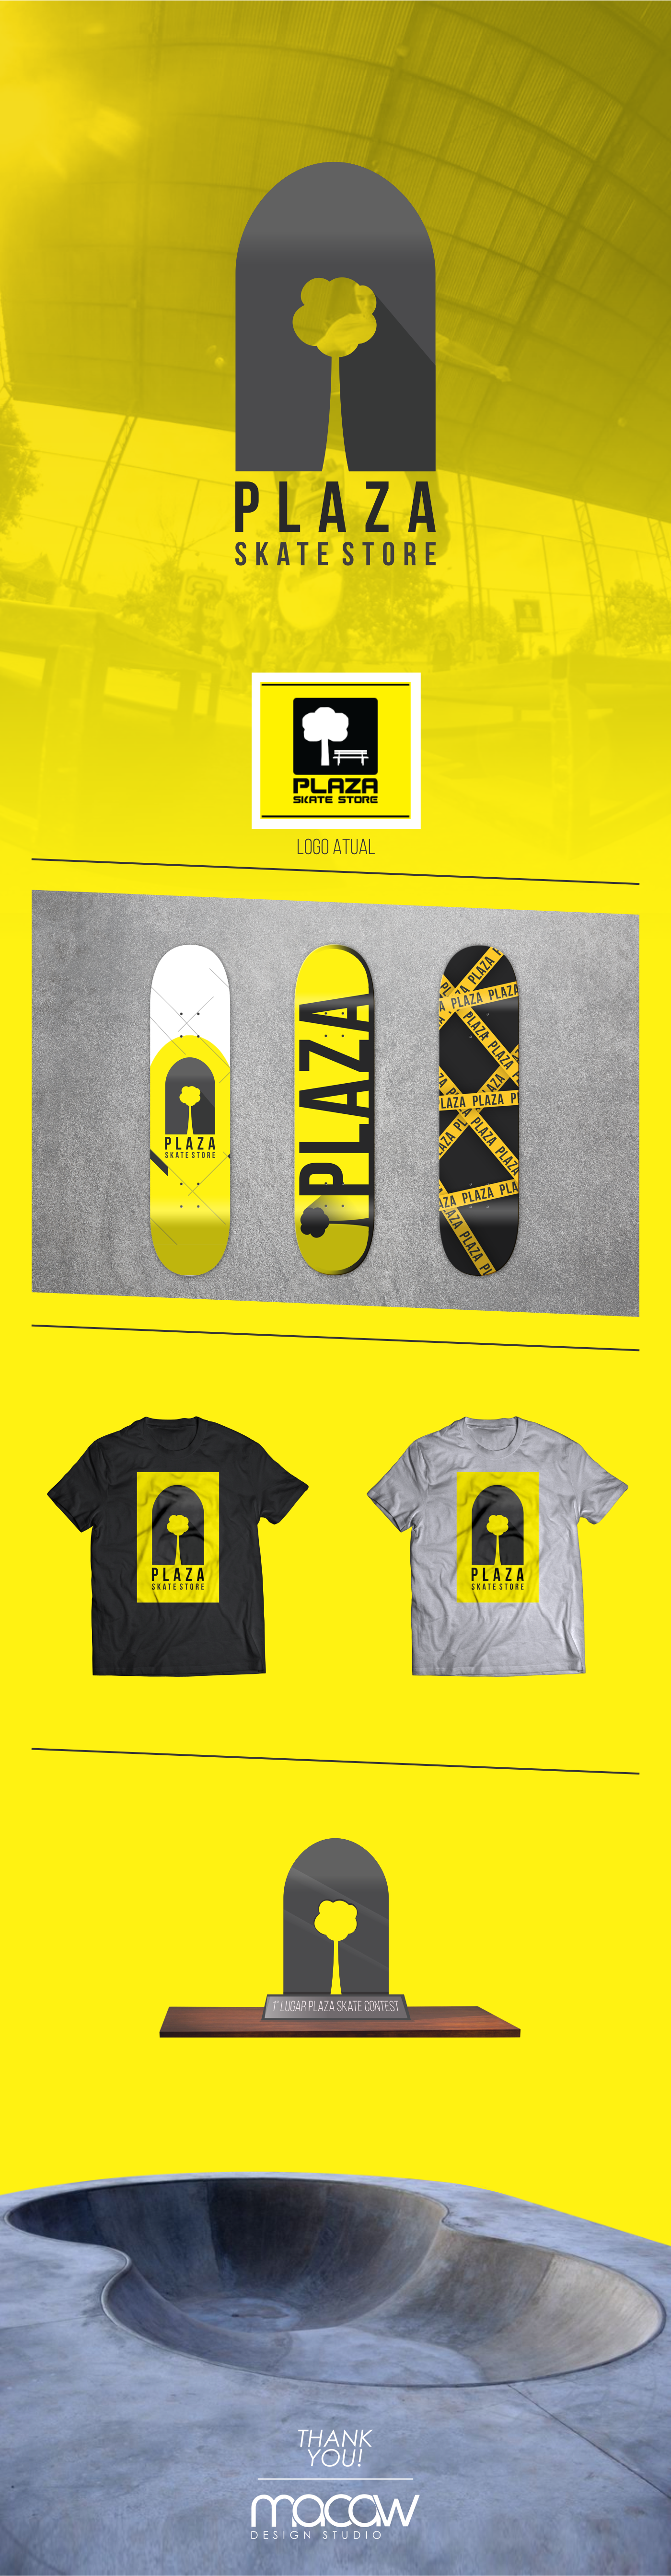 design skateboard store skate plaza shape t-shirts